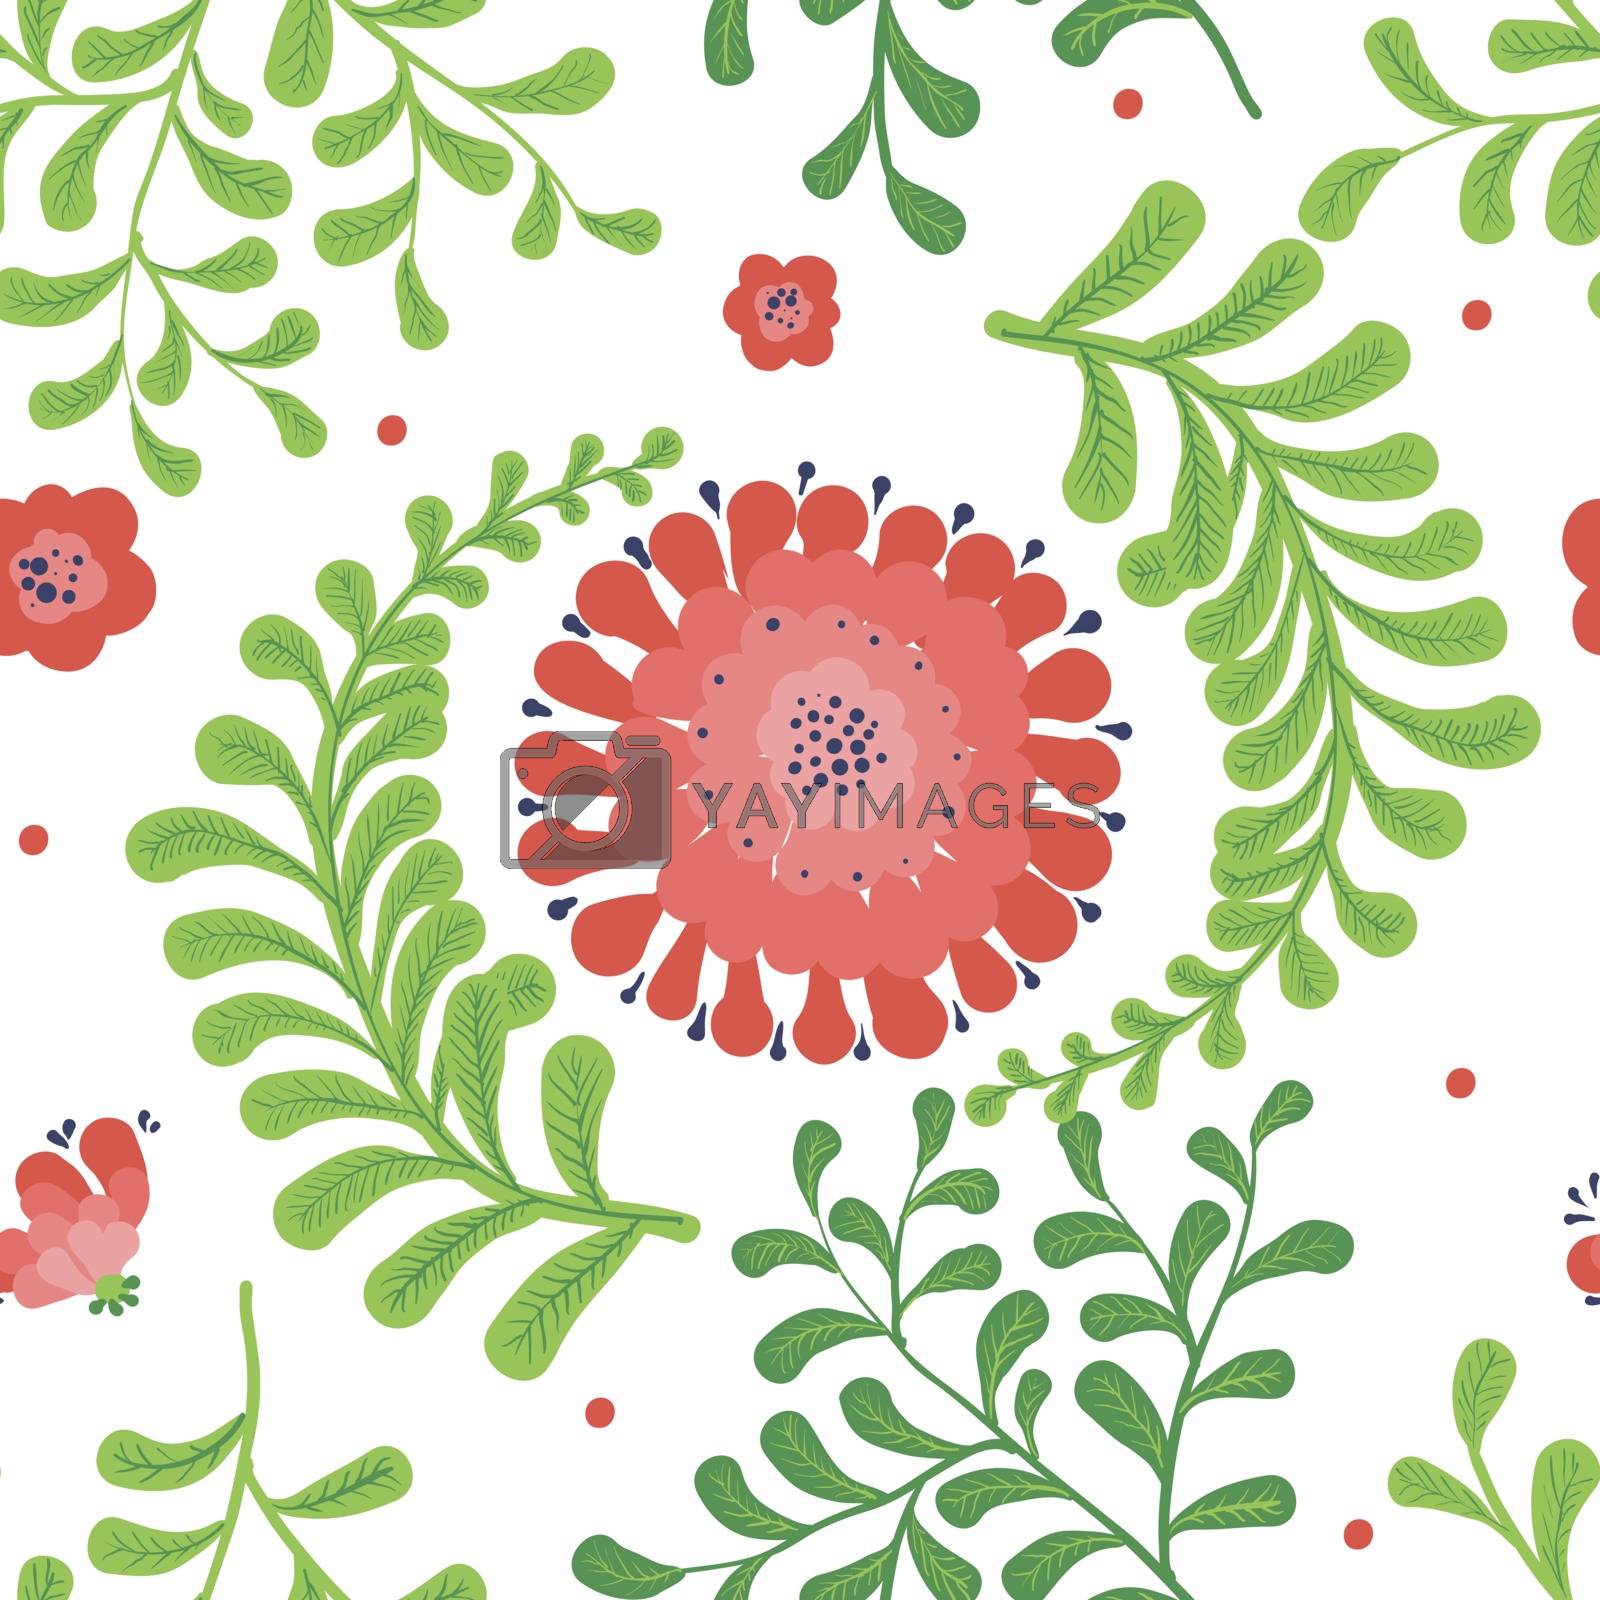 Royalty free image of Elegance Seamless pattern with flowers by OlgaBerlet